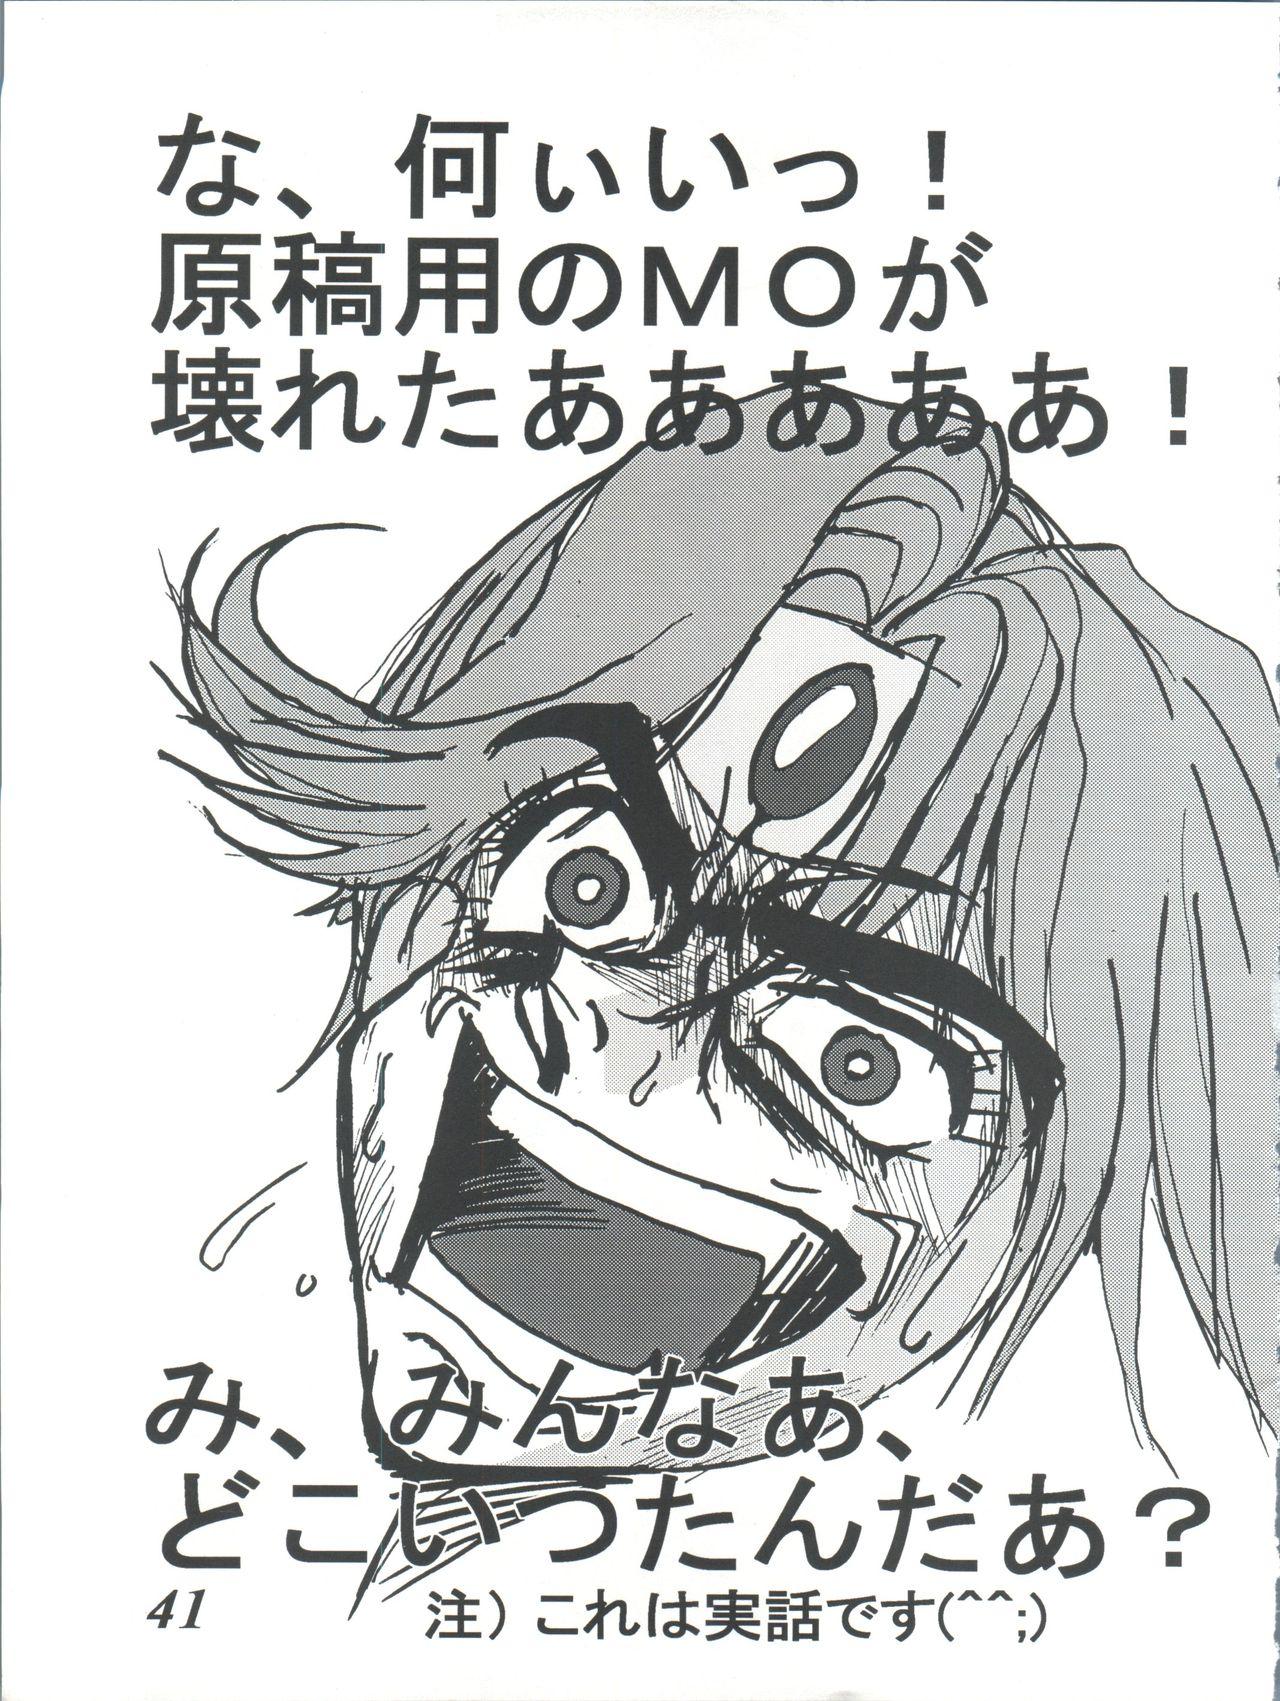 MOVA FILE 3 - Hitomi! Diamond!! 40